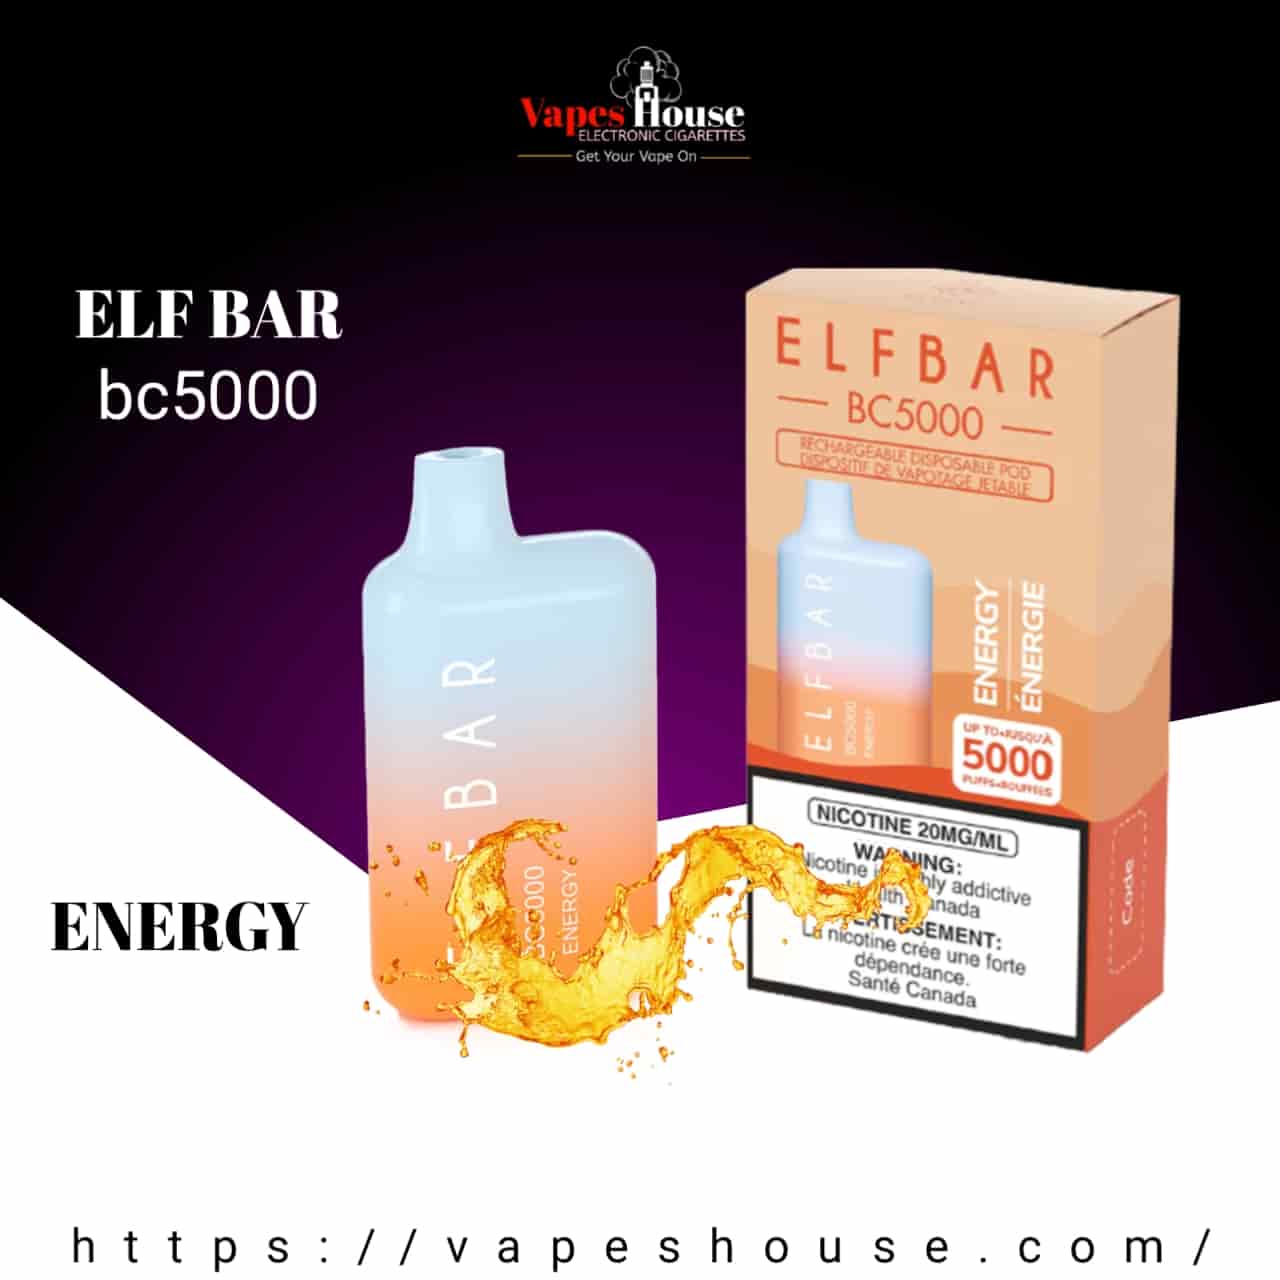 elf bar bc5000 energy